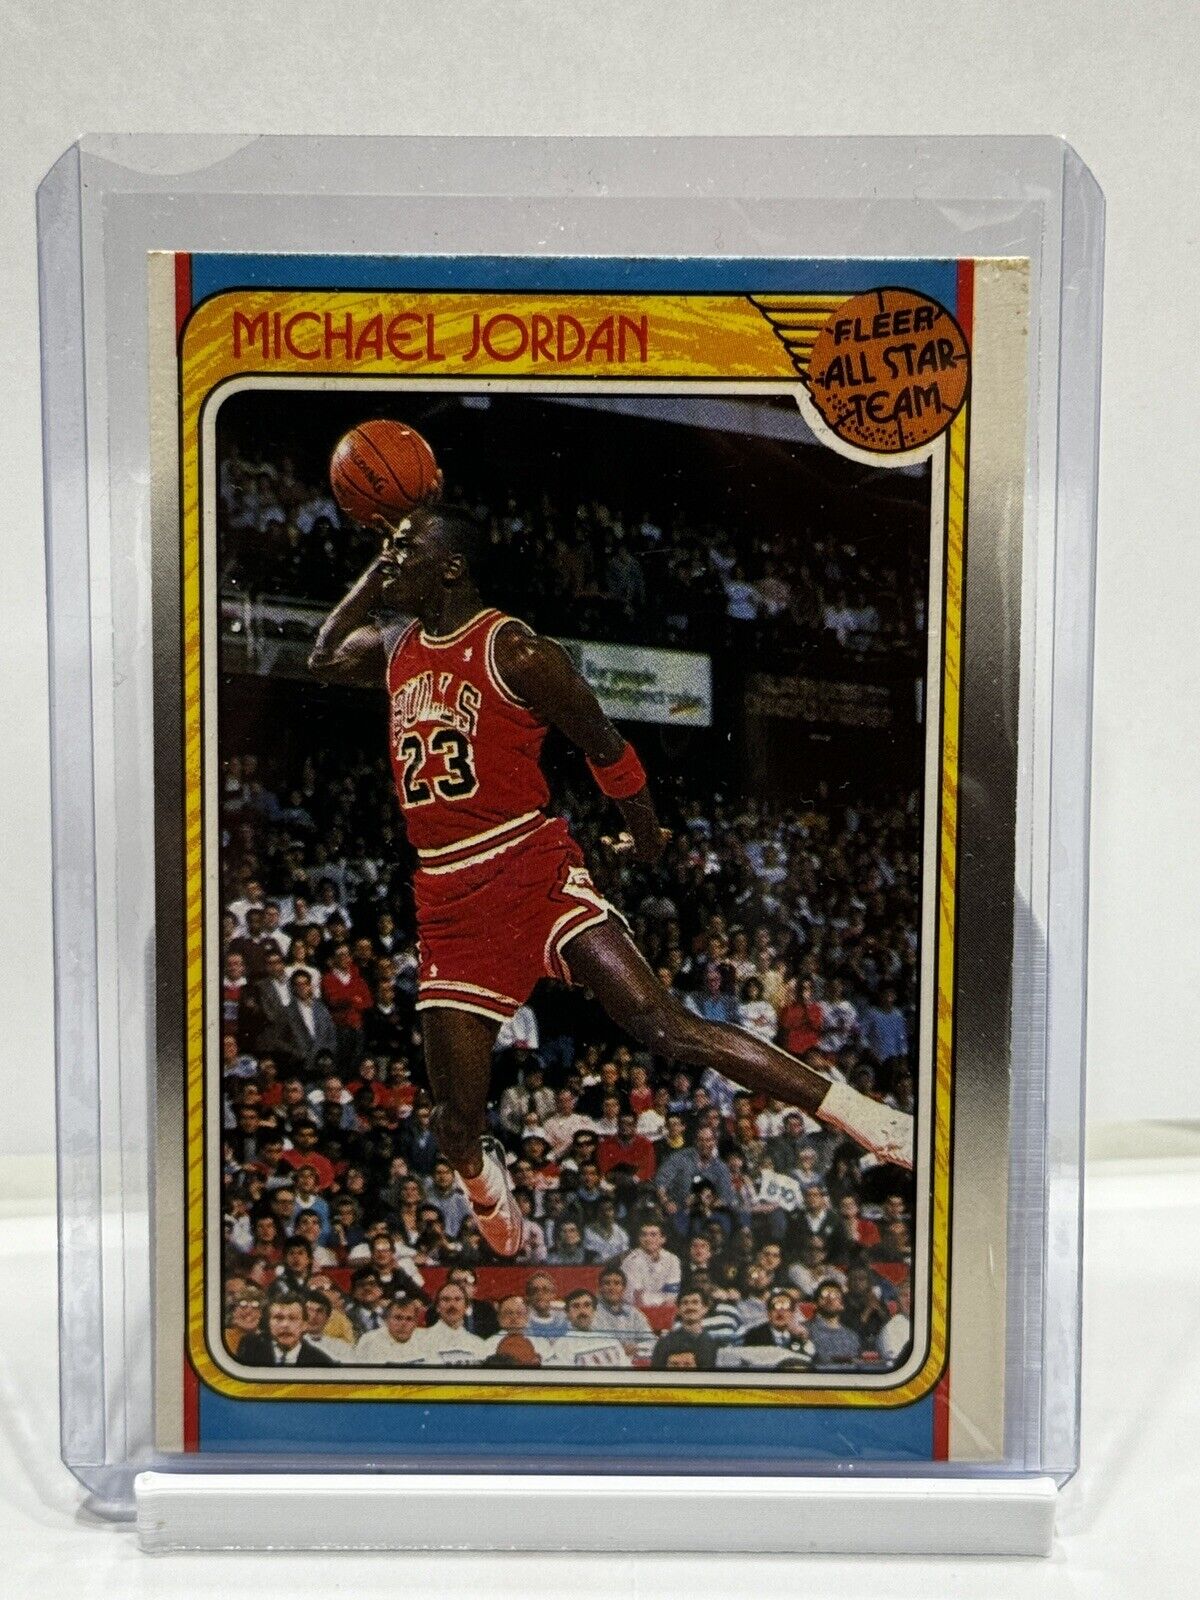 MICHAEL JORDAN Chicago Bulls 1988 Fleer All-Star Team Basketball Card #120